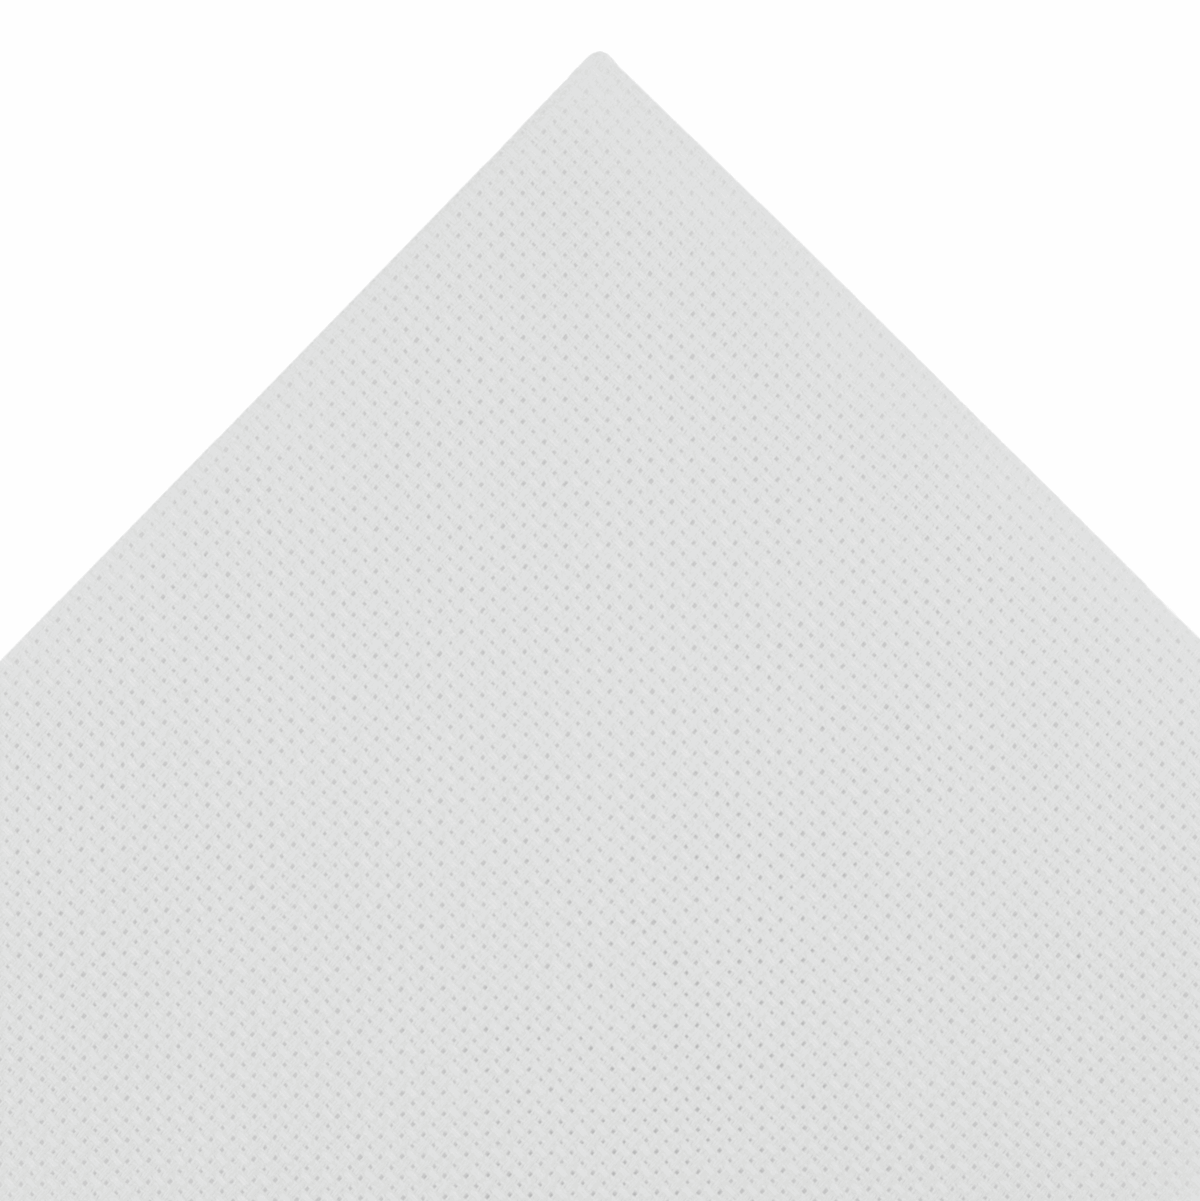 Trimits White Needlecraft Fabric - Aida 14 Count 45 x 30cm